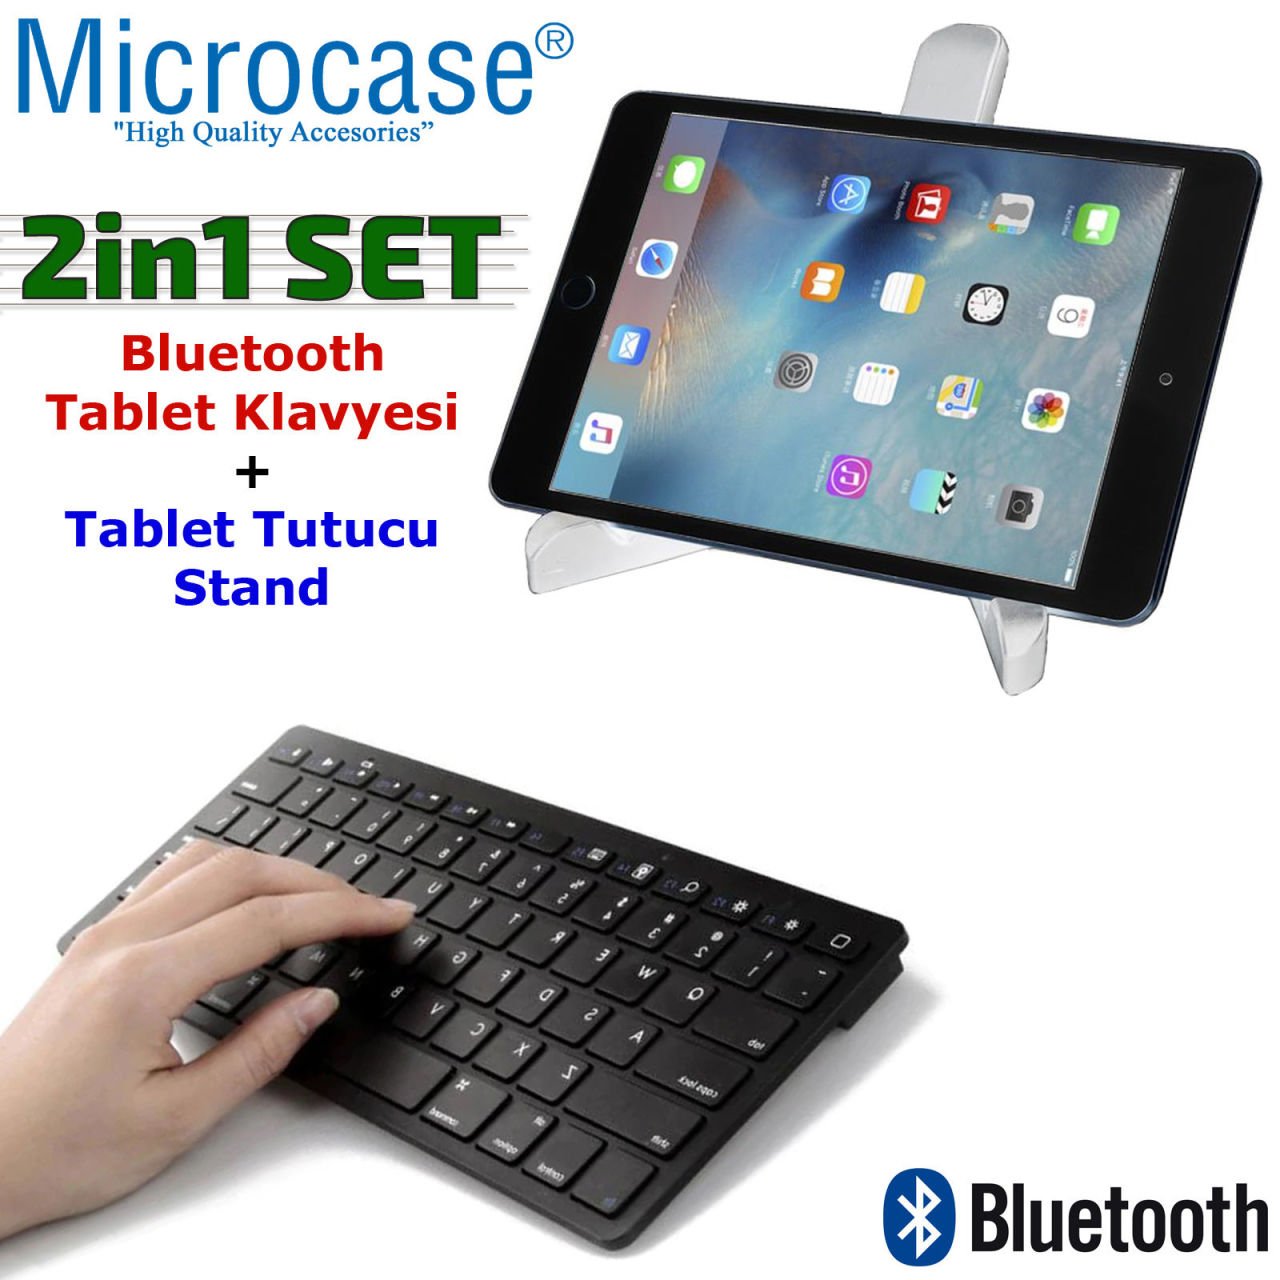 Microcase Alcatel A3 10.1 için Bluetooth Kablosuz Tablet Klavyesi + Tablet Tutucu Stand